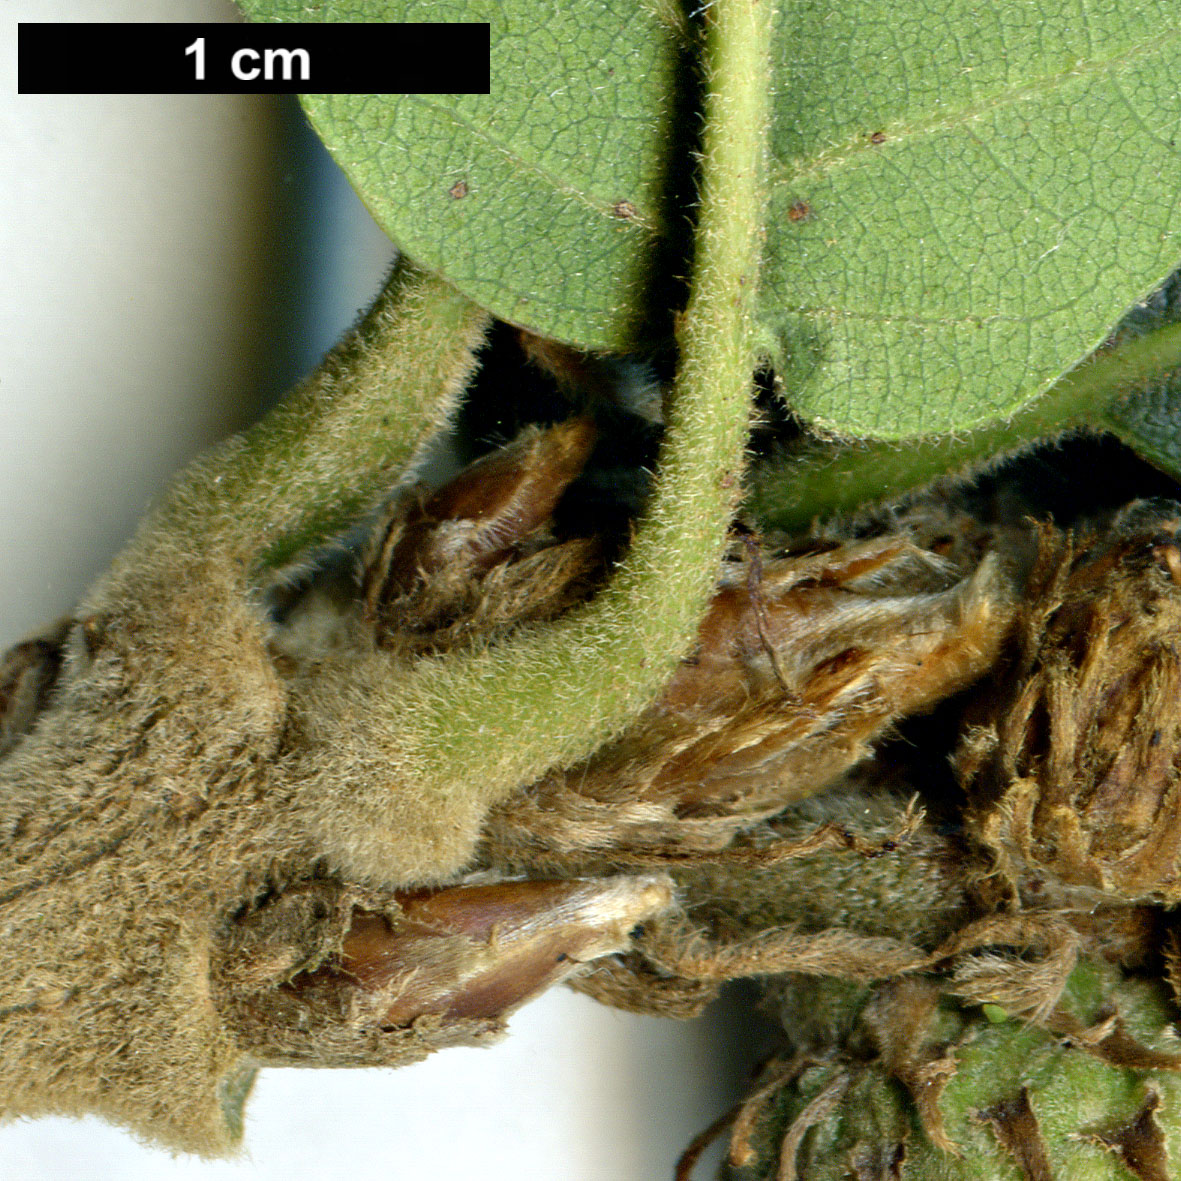 High resolution image: Family: Fagaceae - Genus: Quercus - Taxon: macranthera